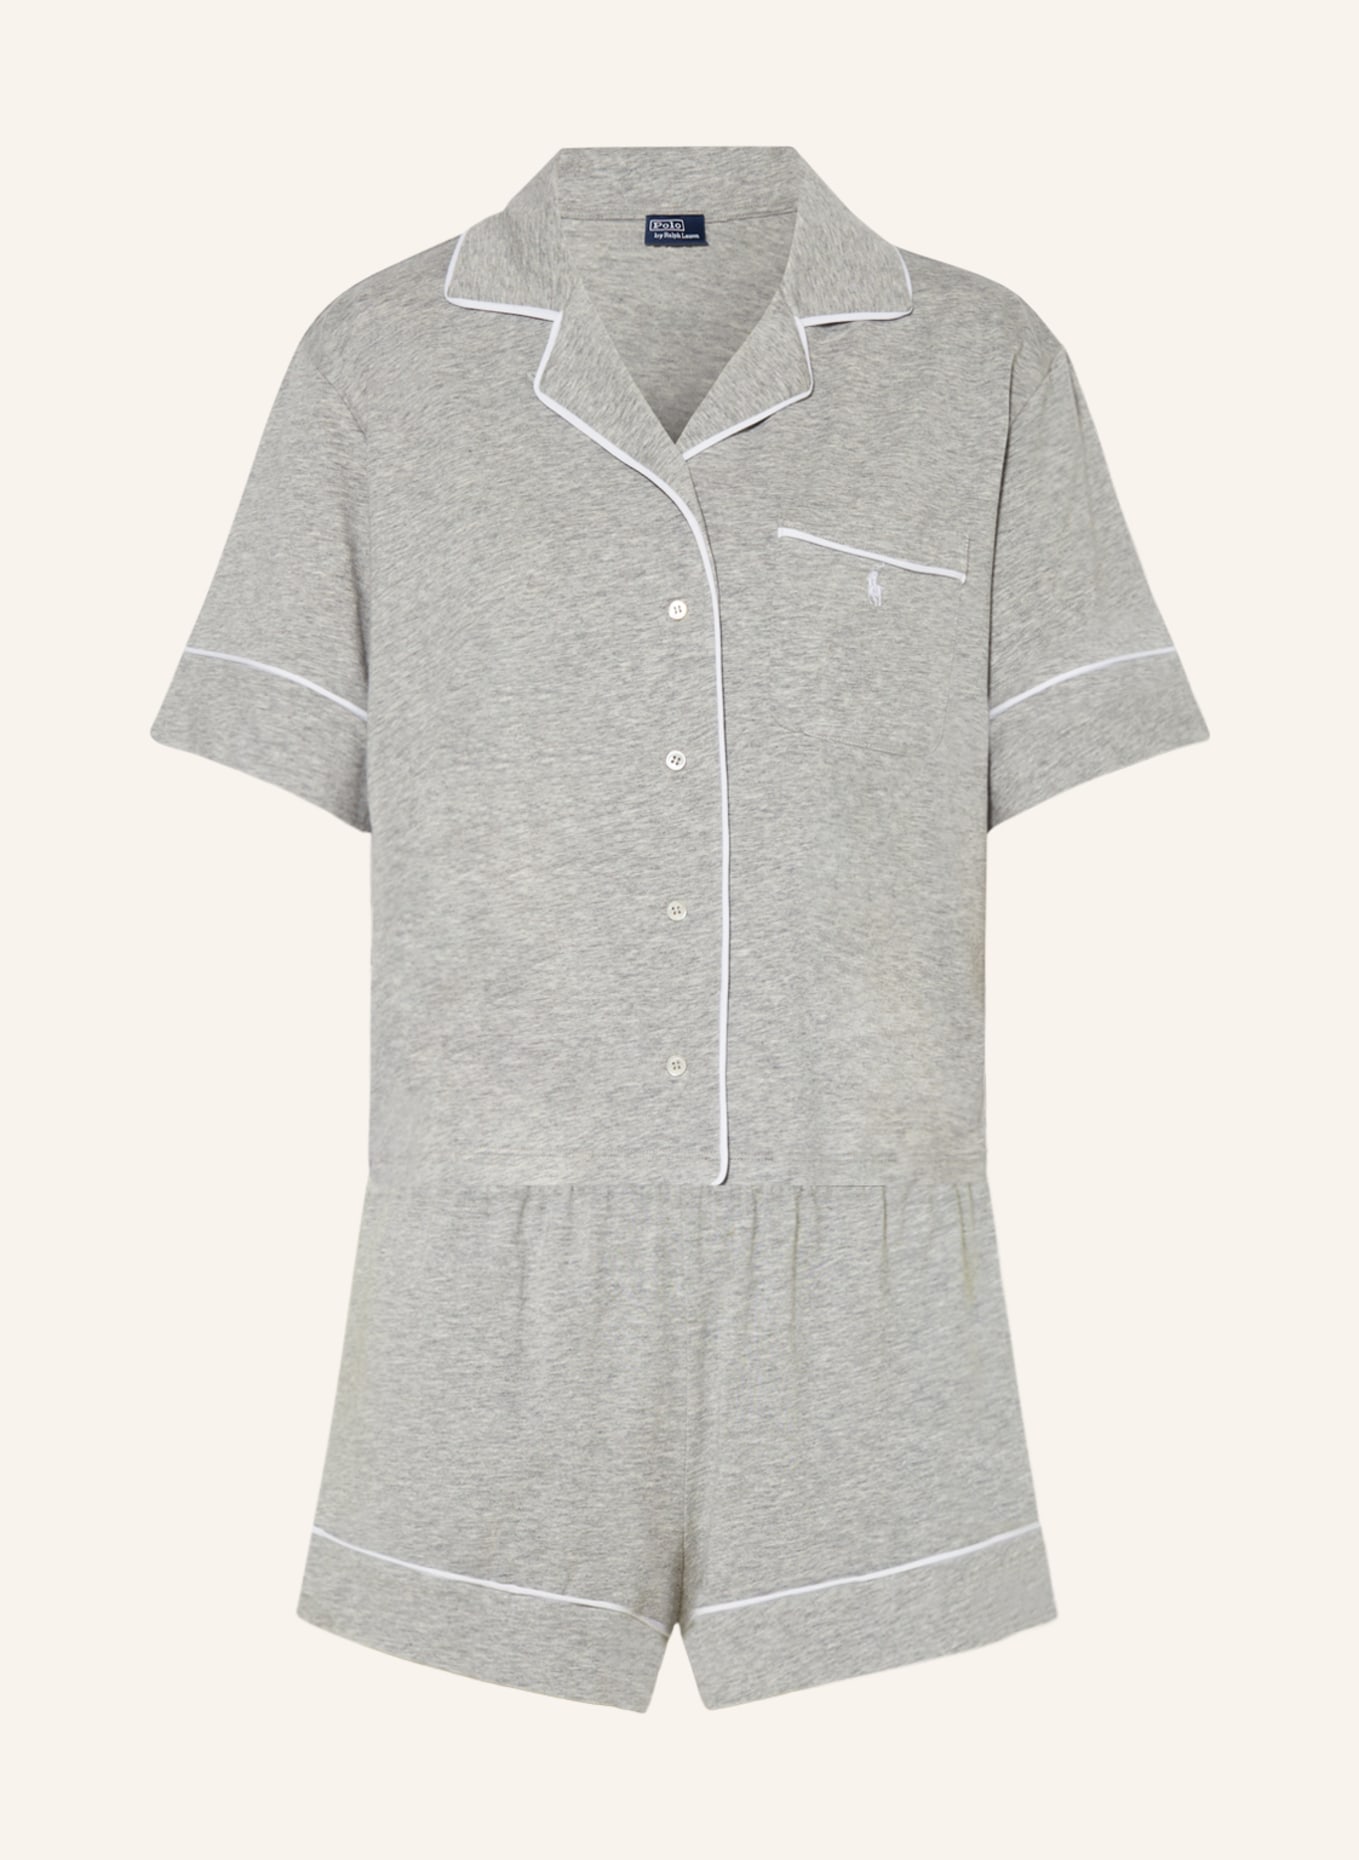 POLO RALPH LAUREN Shorty-Schlafanzug, Farbe: GRAU (Bild 1)